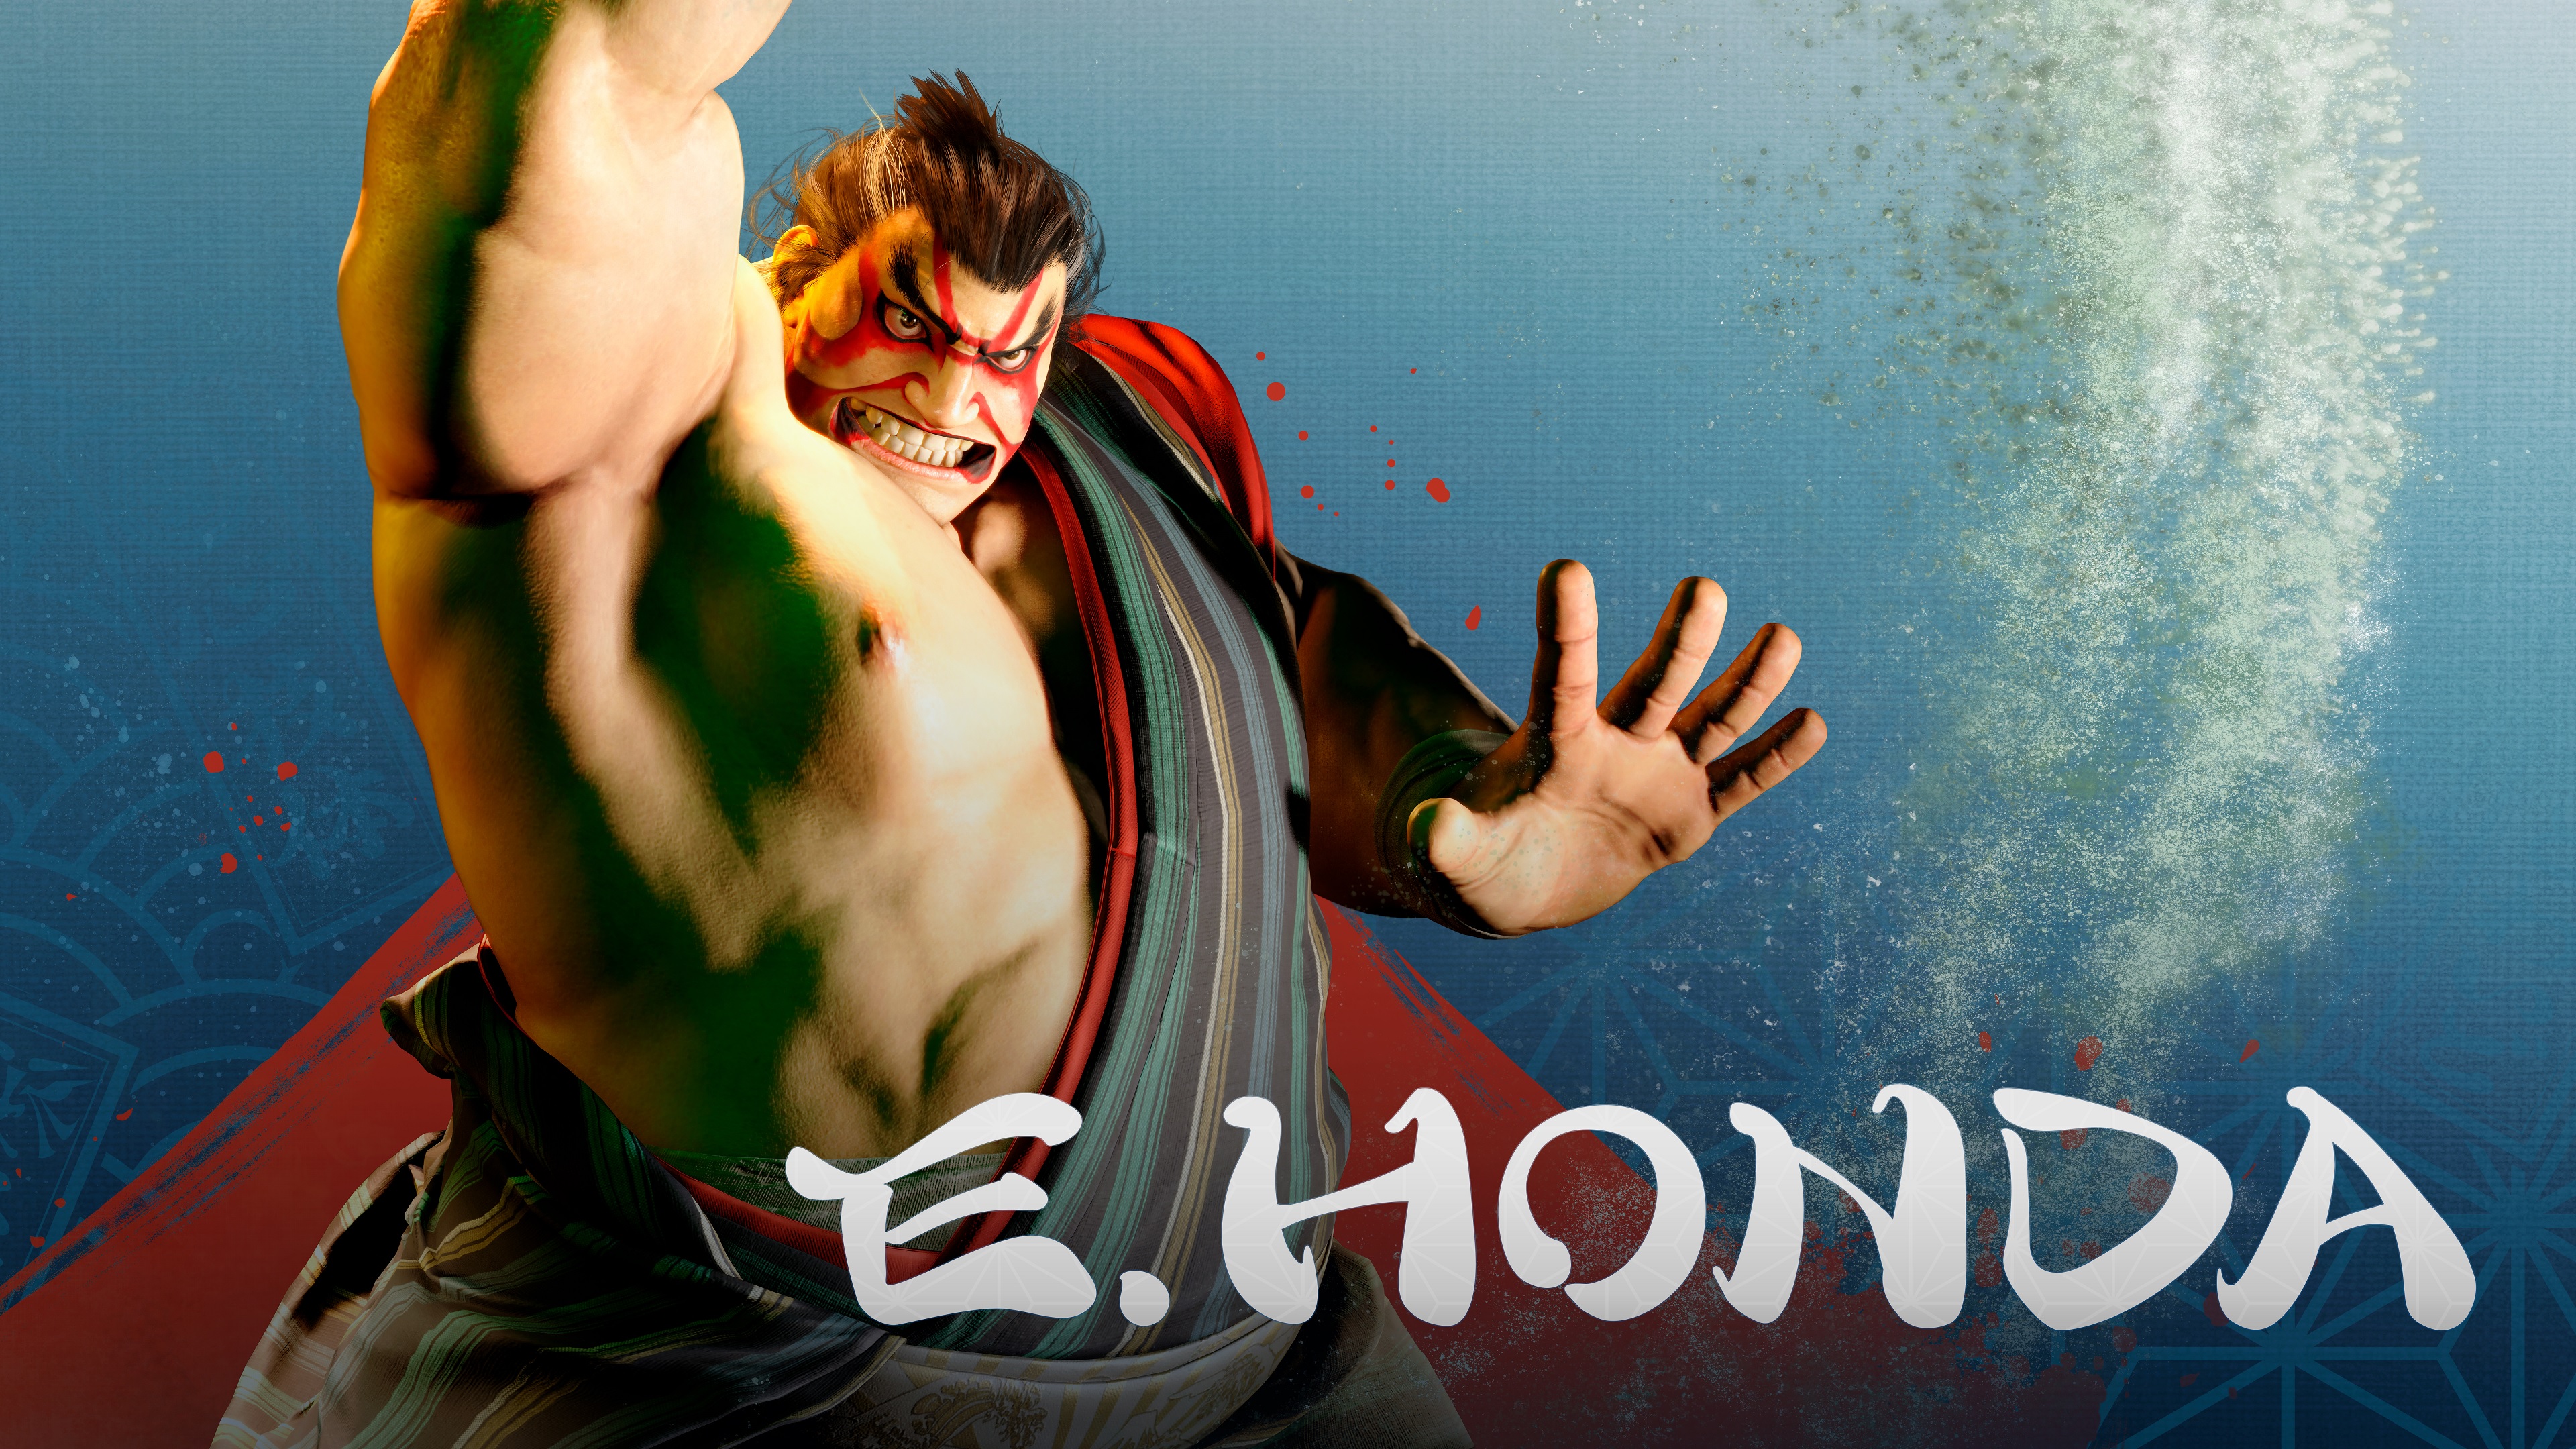 Промо-арт Street Fighter 6 E. Honda